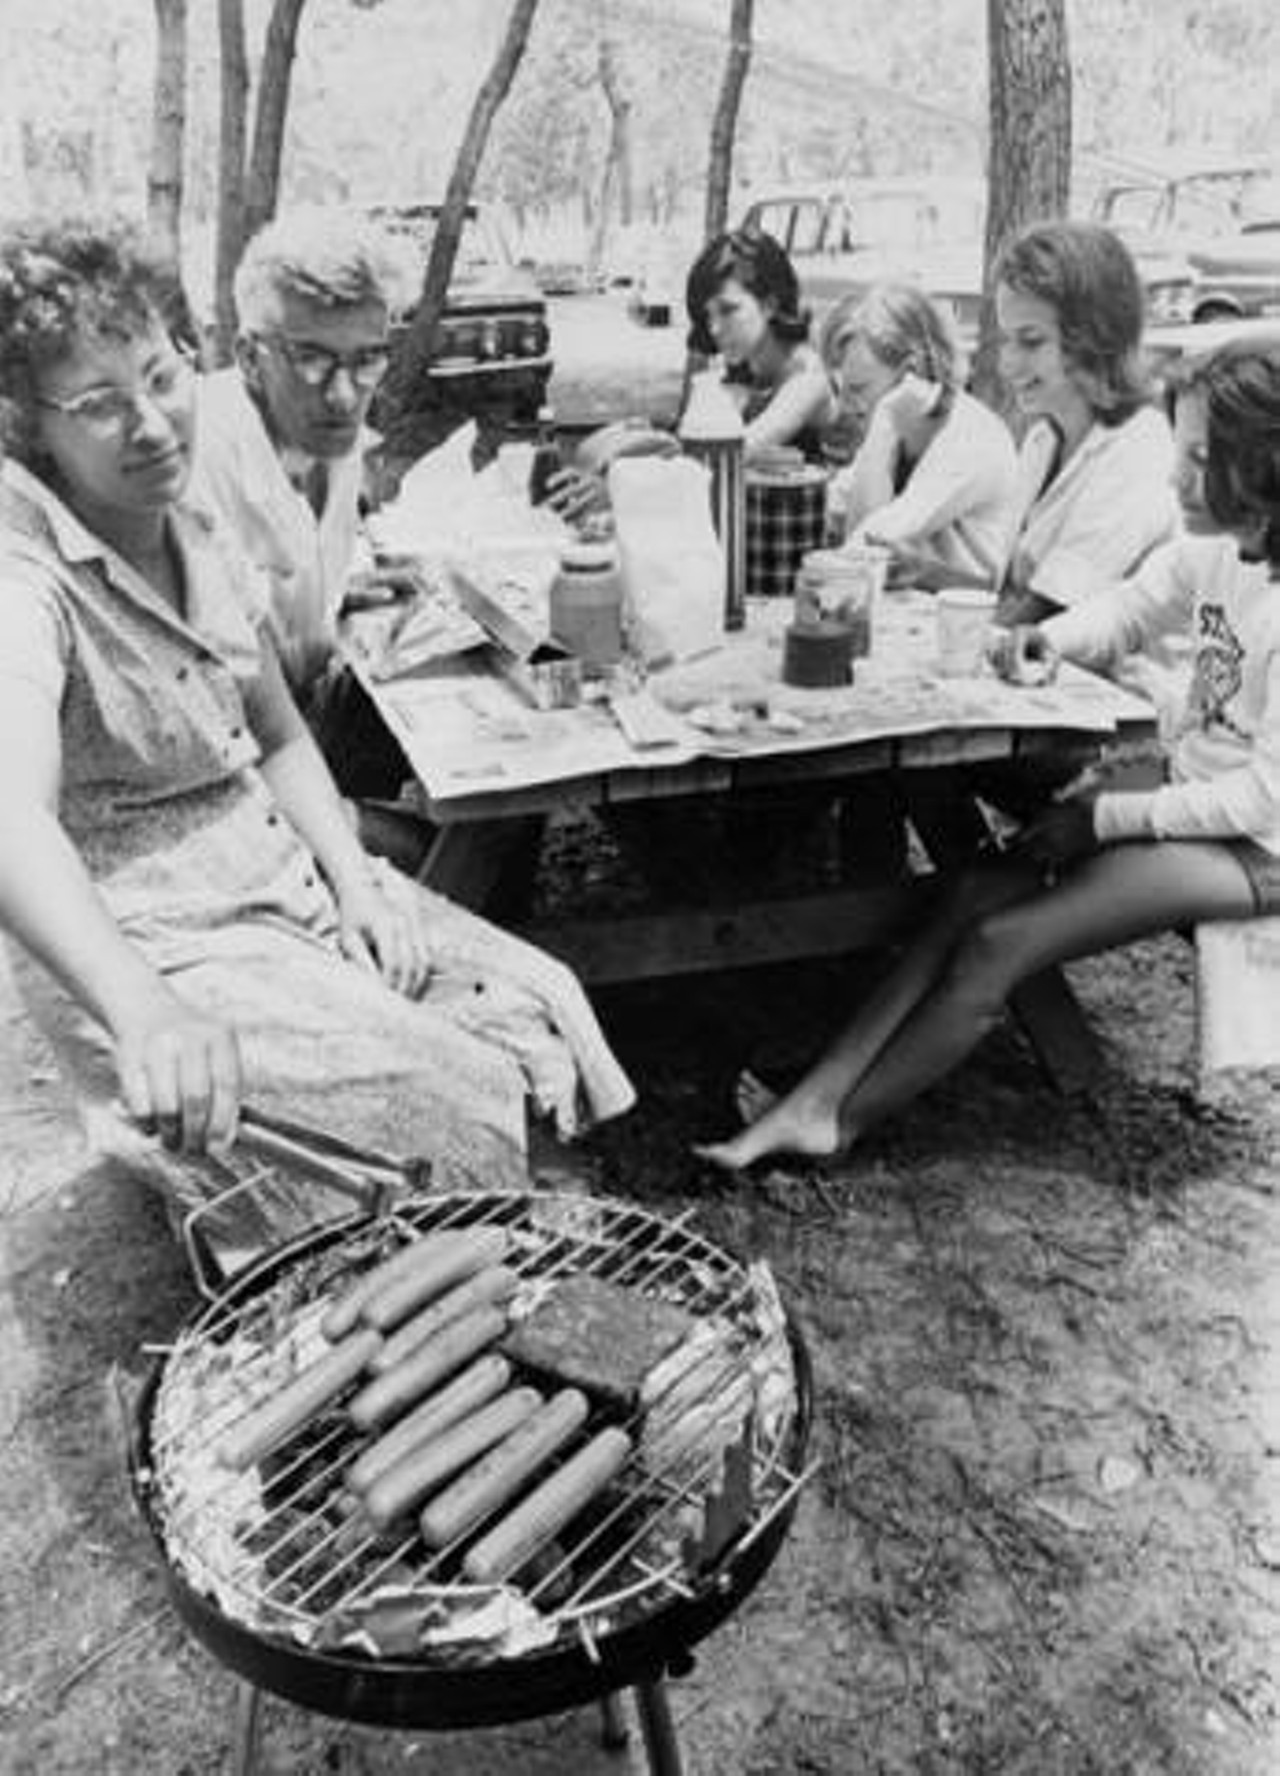 Family picnicking at Mentor Headlands, 1964.